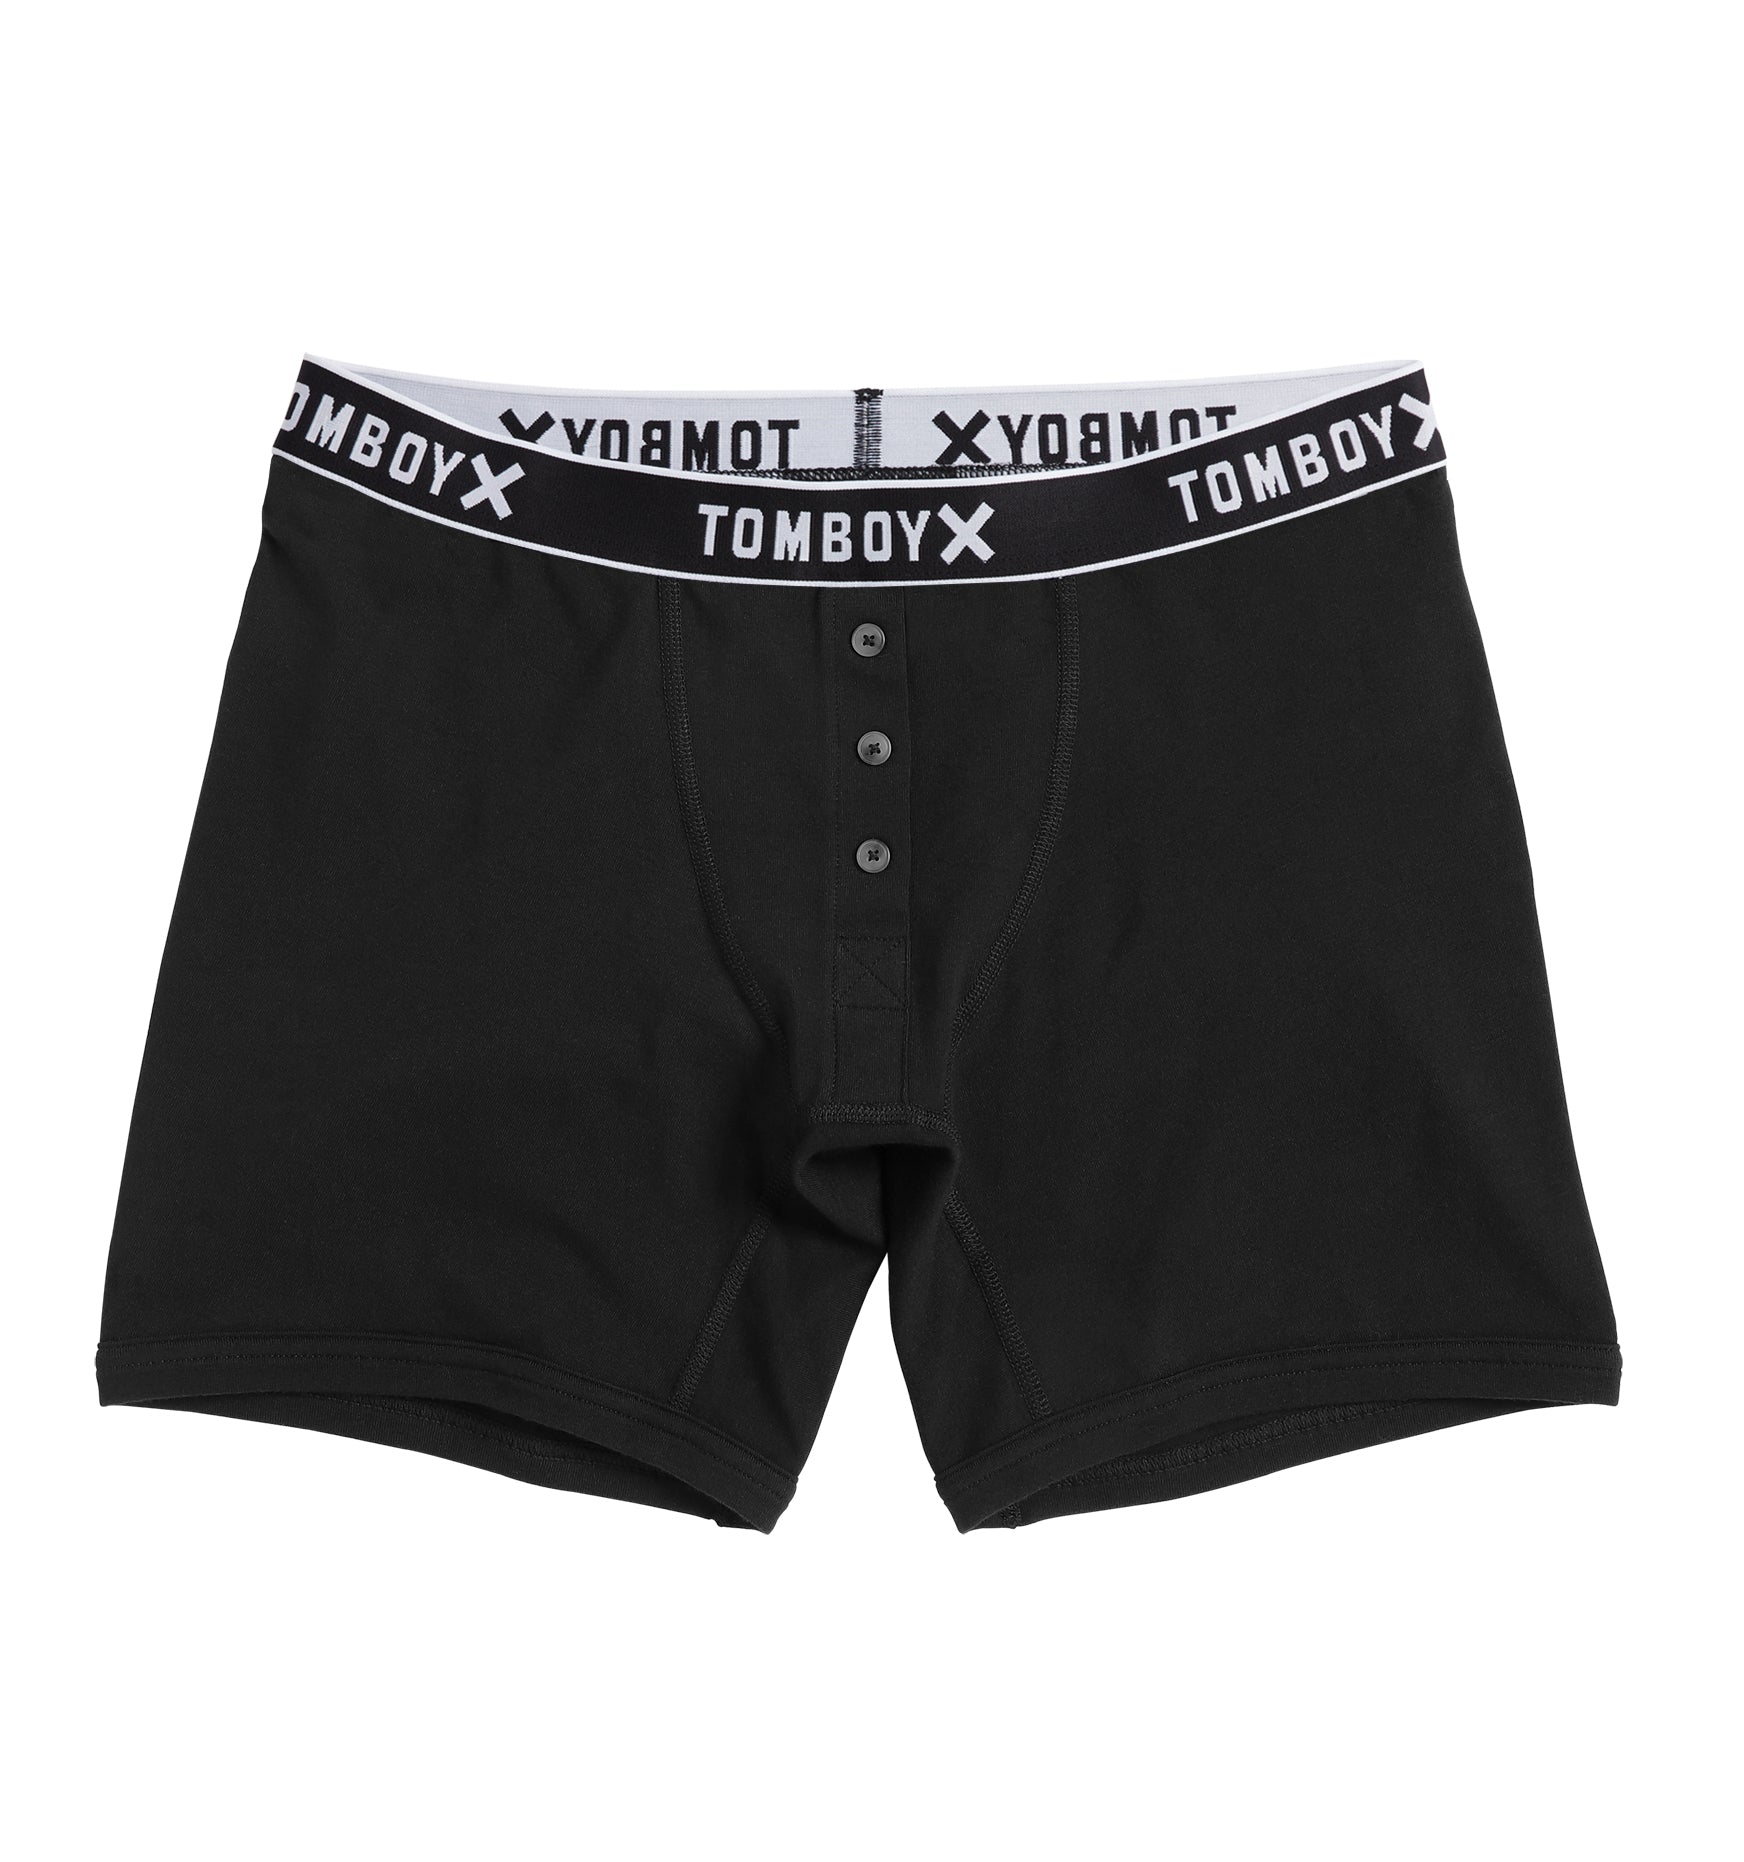 Tomboyx Packing 6 Inseam Fly Boxer Briefs, Ftm Pouch Underwear